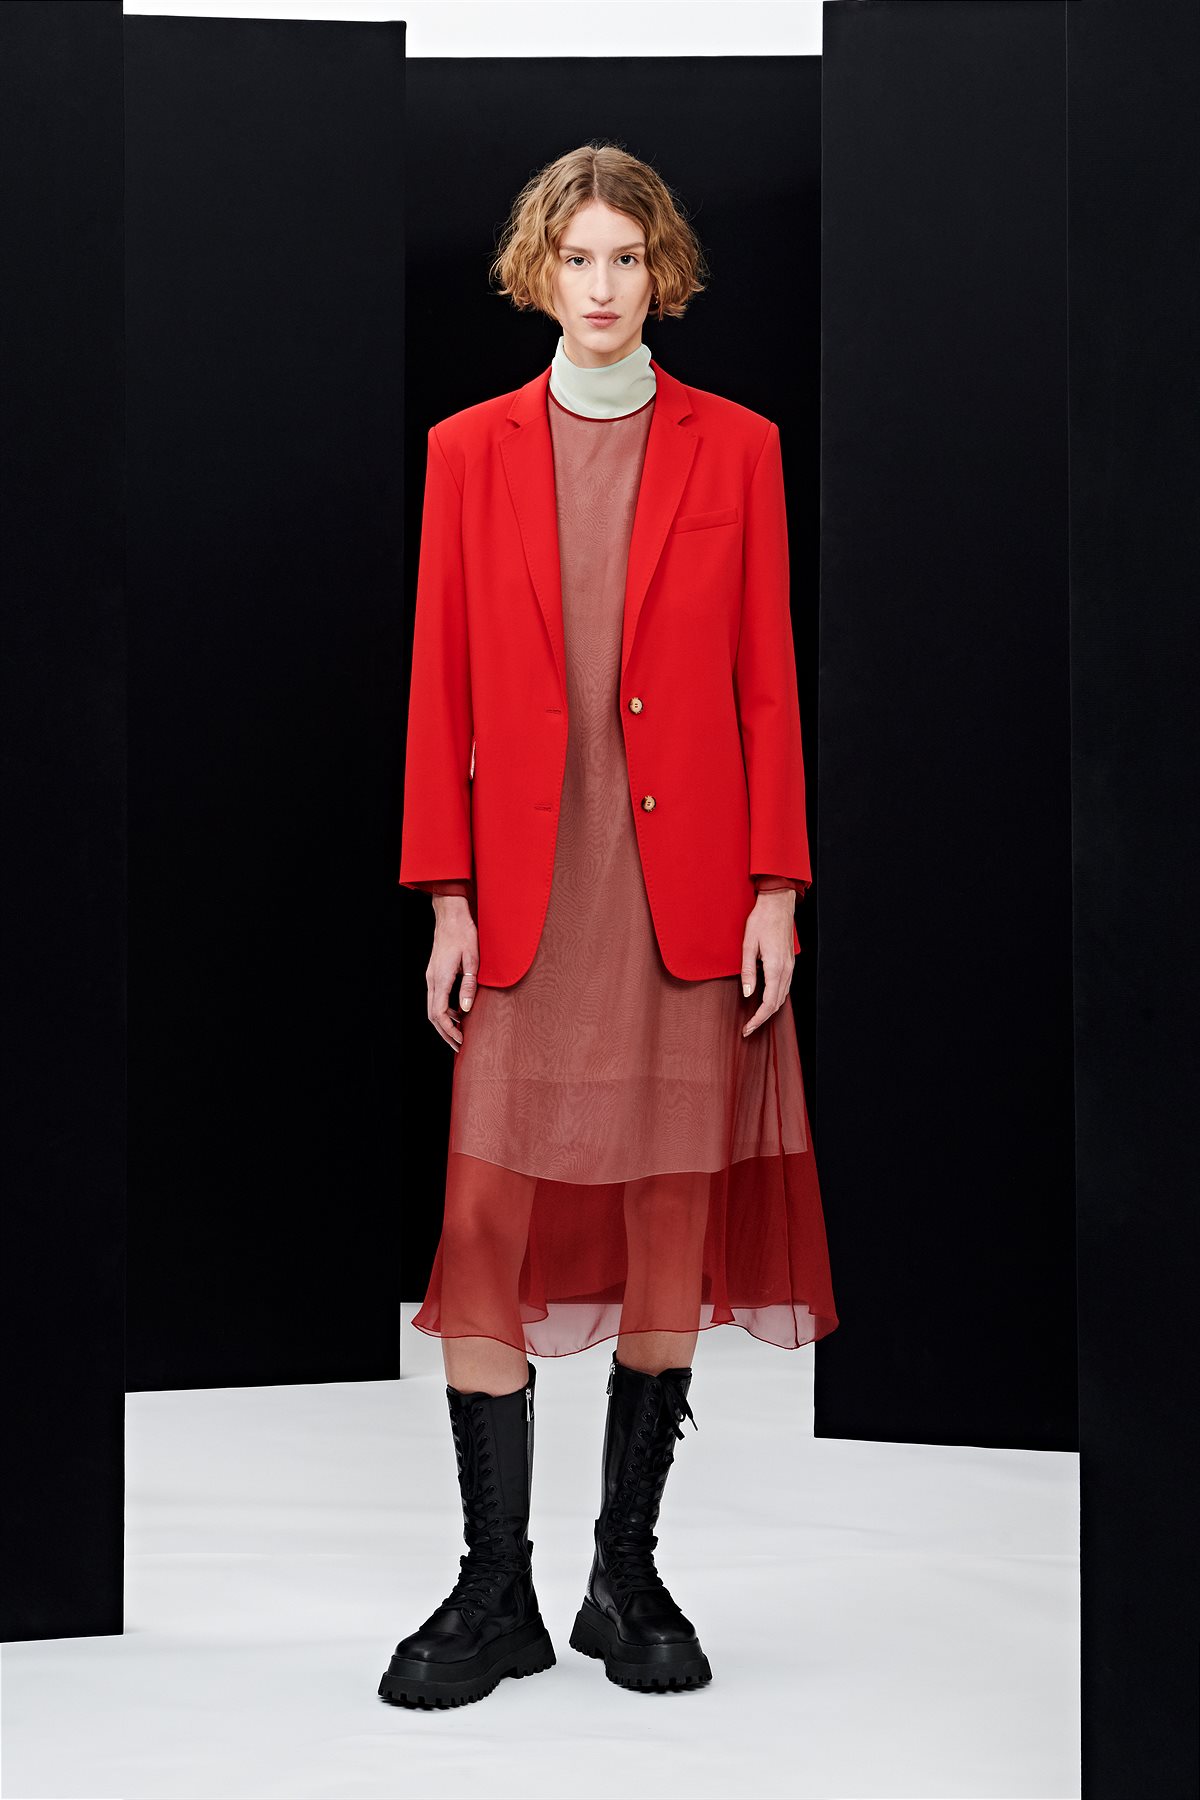 JONES red wool jacket, DOELIN sienna & sage 3-layer silk chiffon dress